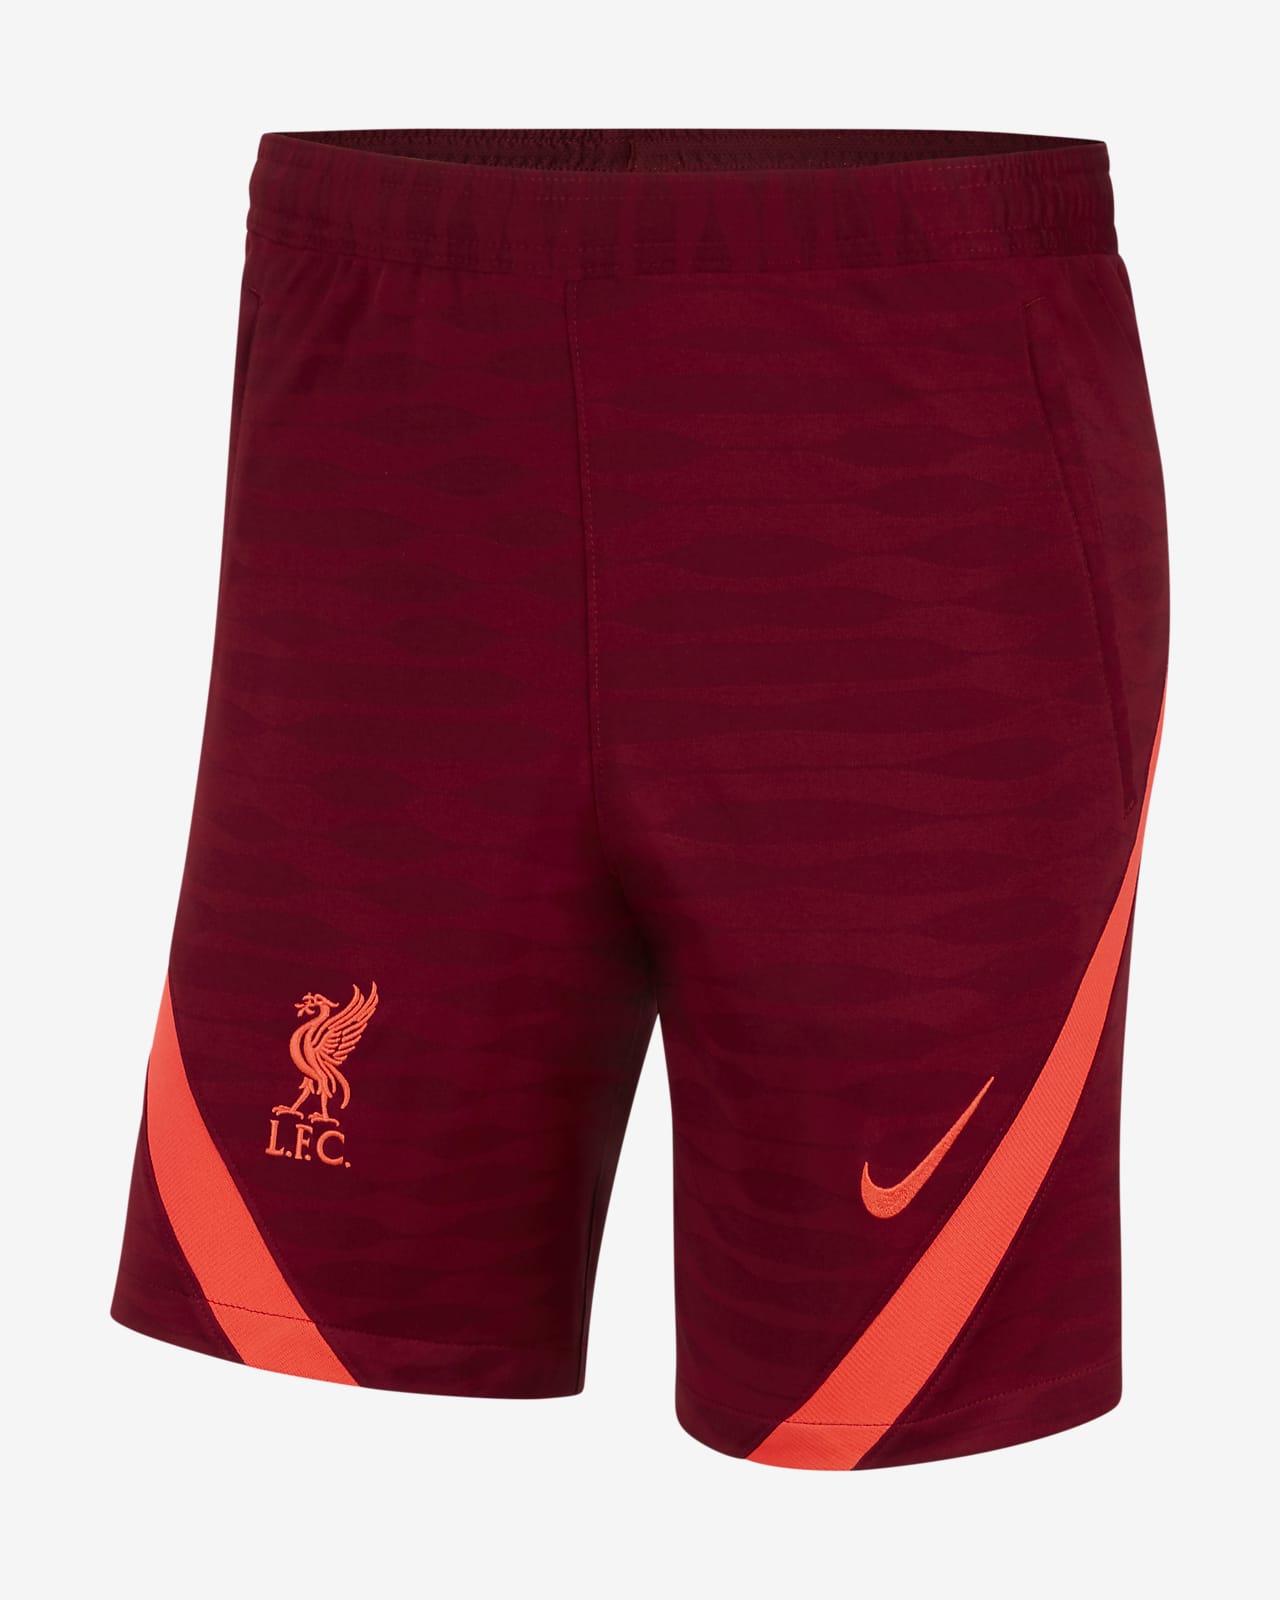 Liverpool F.C. Strike Men's Football Shorts